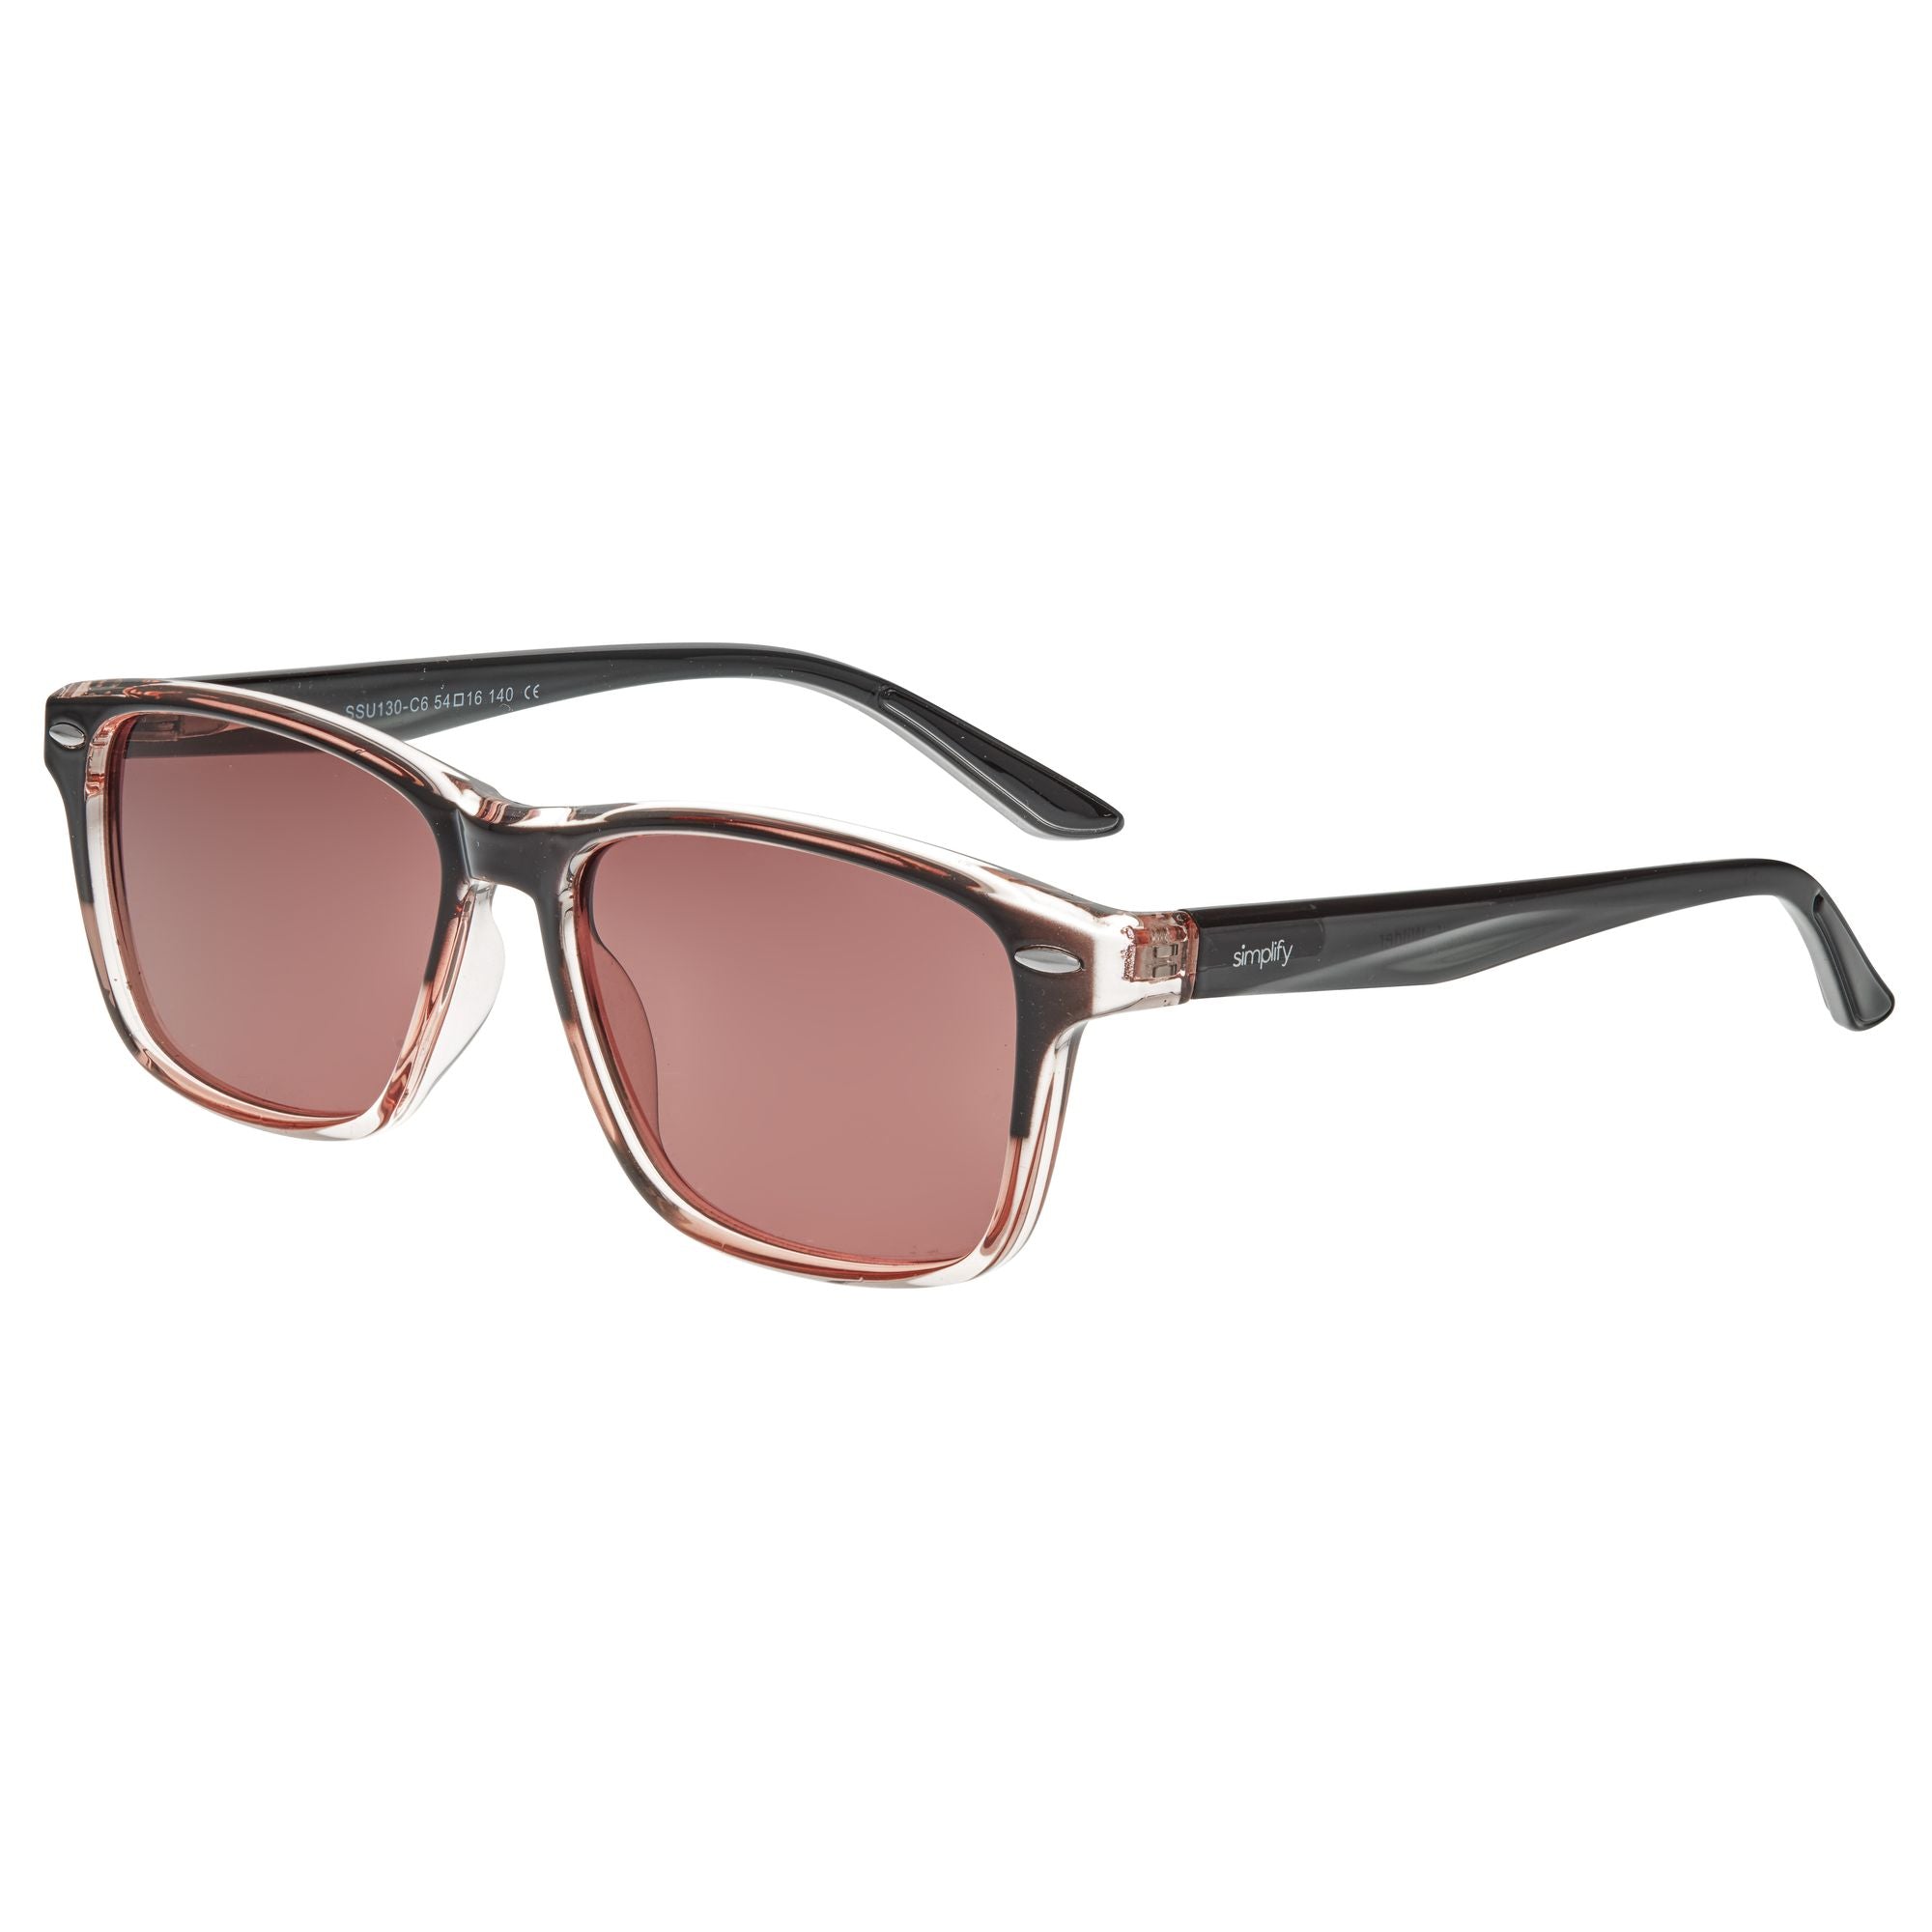 Simplify Wilder Polarized Sunglasses - Pink/Pink - SSU130-C6